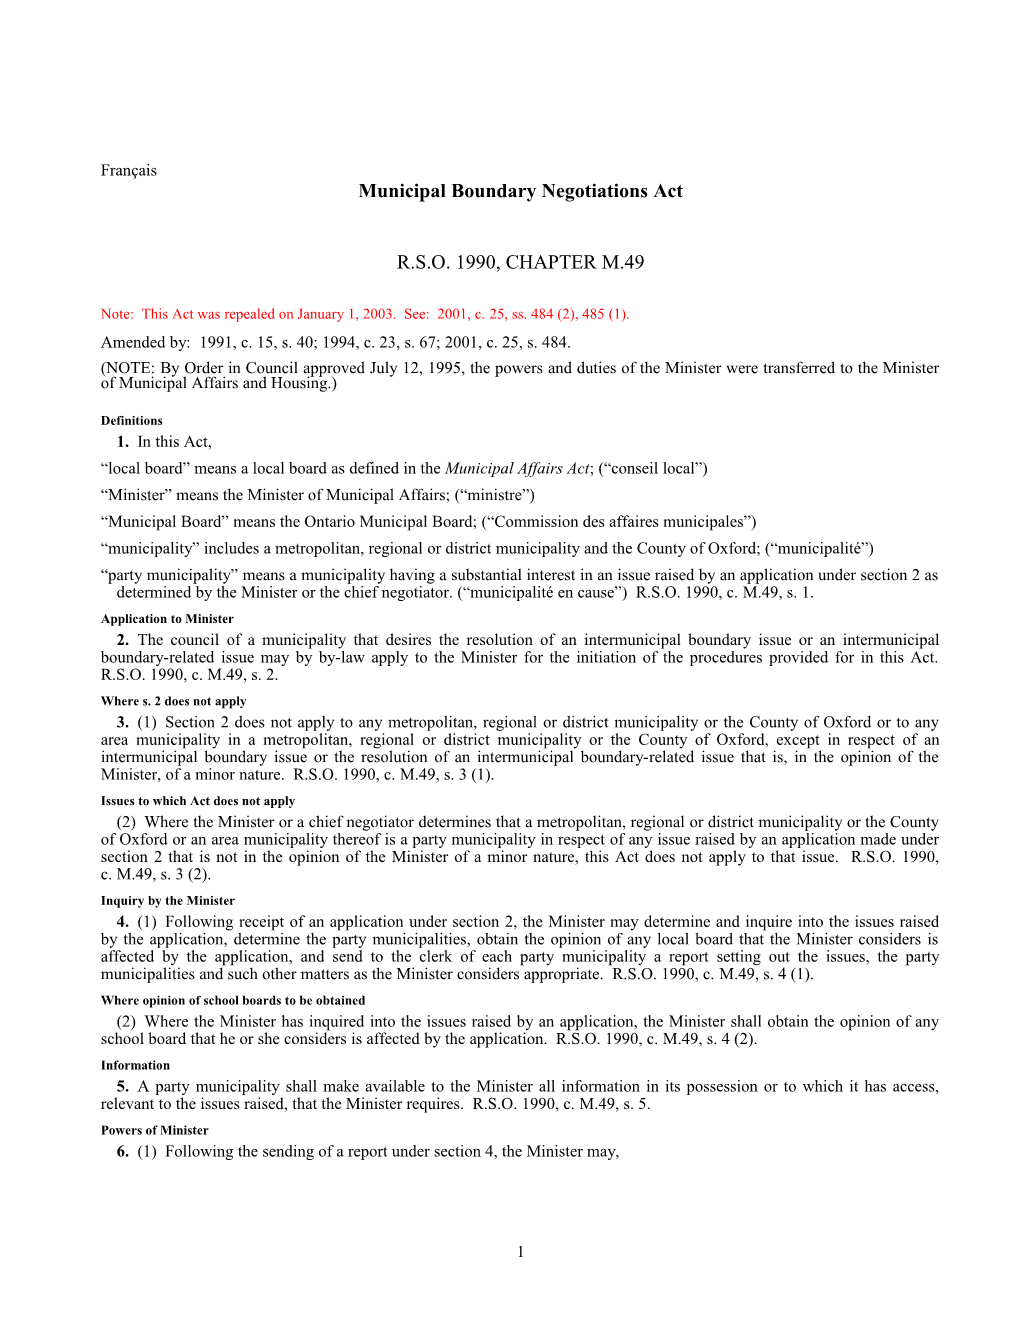 Municipal Boundary Negotiations Act, R.S.O. 1990, C. M.49